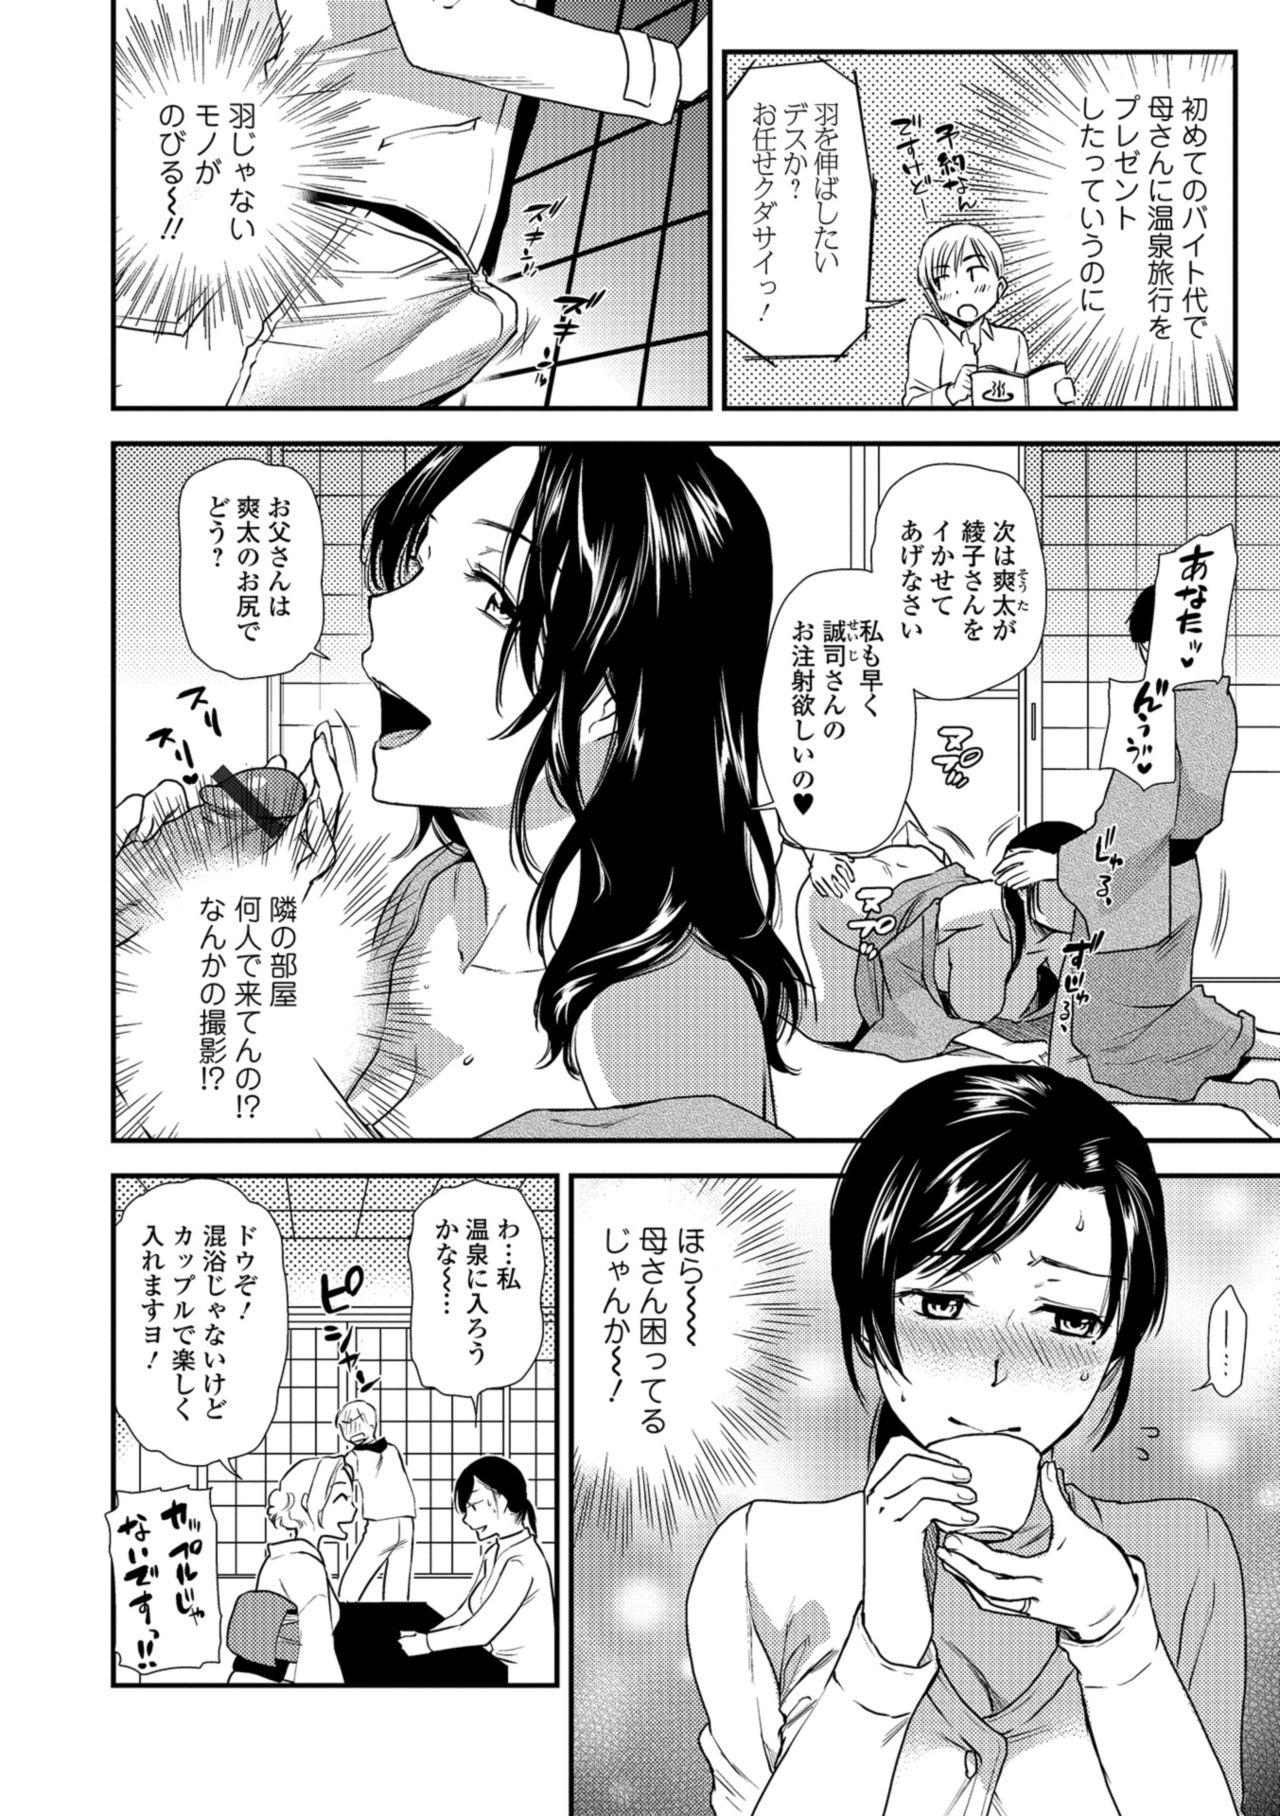 Seduction Web Comic Toutetsu Vol. 34 Sucks - Page 4